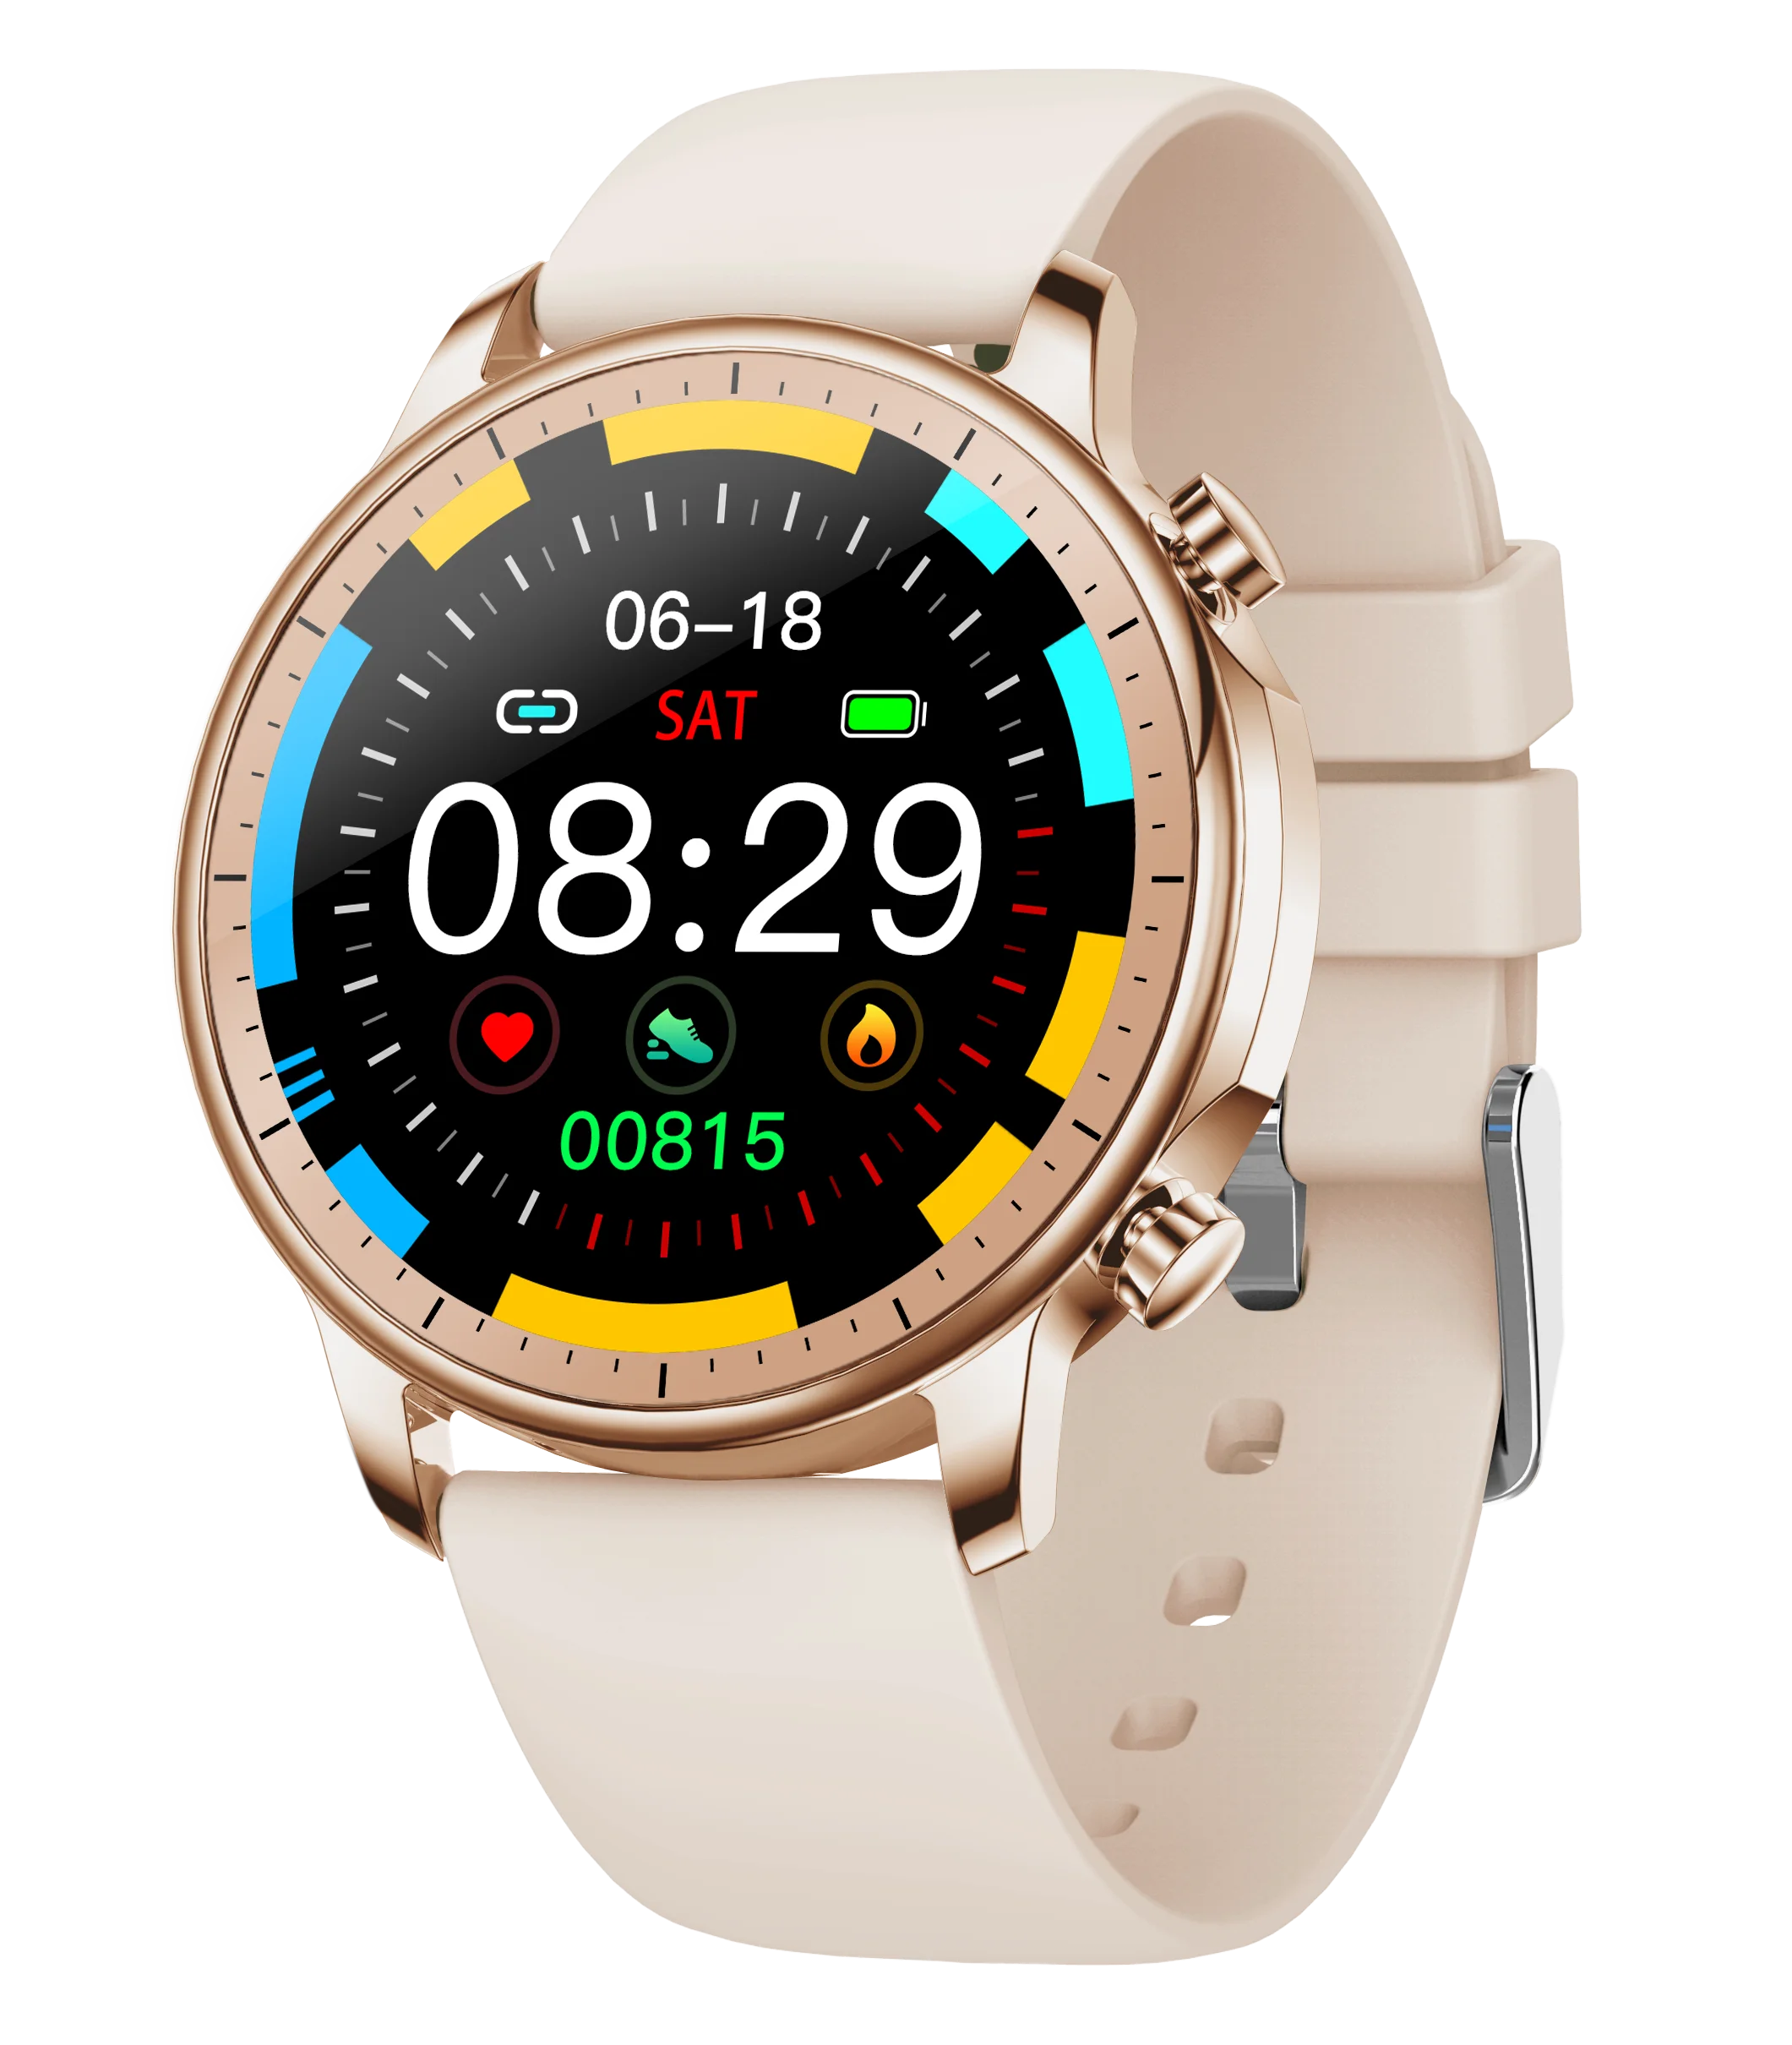 

Smartwatch 2021 Latest V23 Smart Watch, Weather Forecast Heart Rate Monitor Blood Pressure Blood Oxygen Smartwatch for Women Men